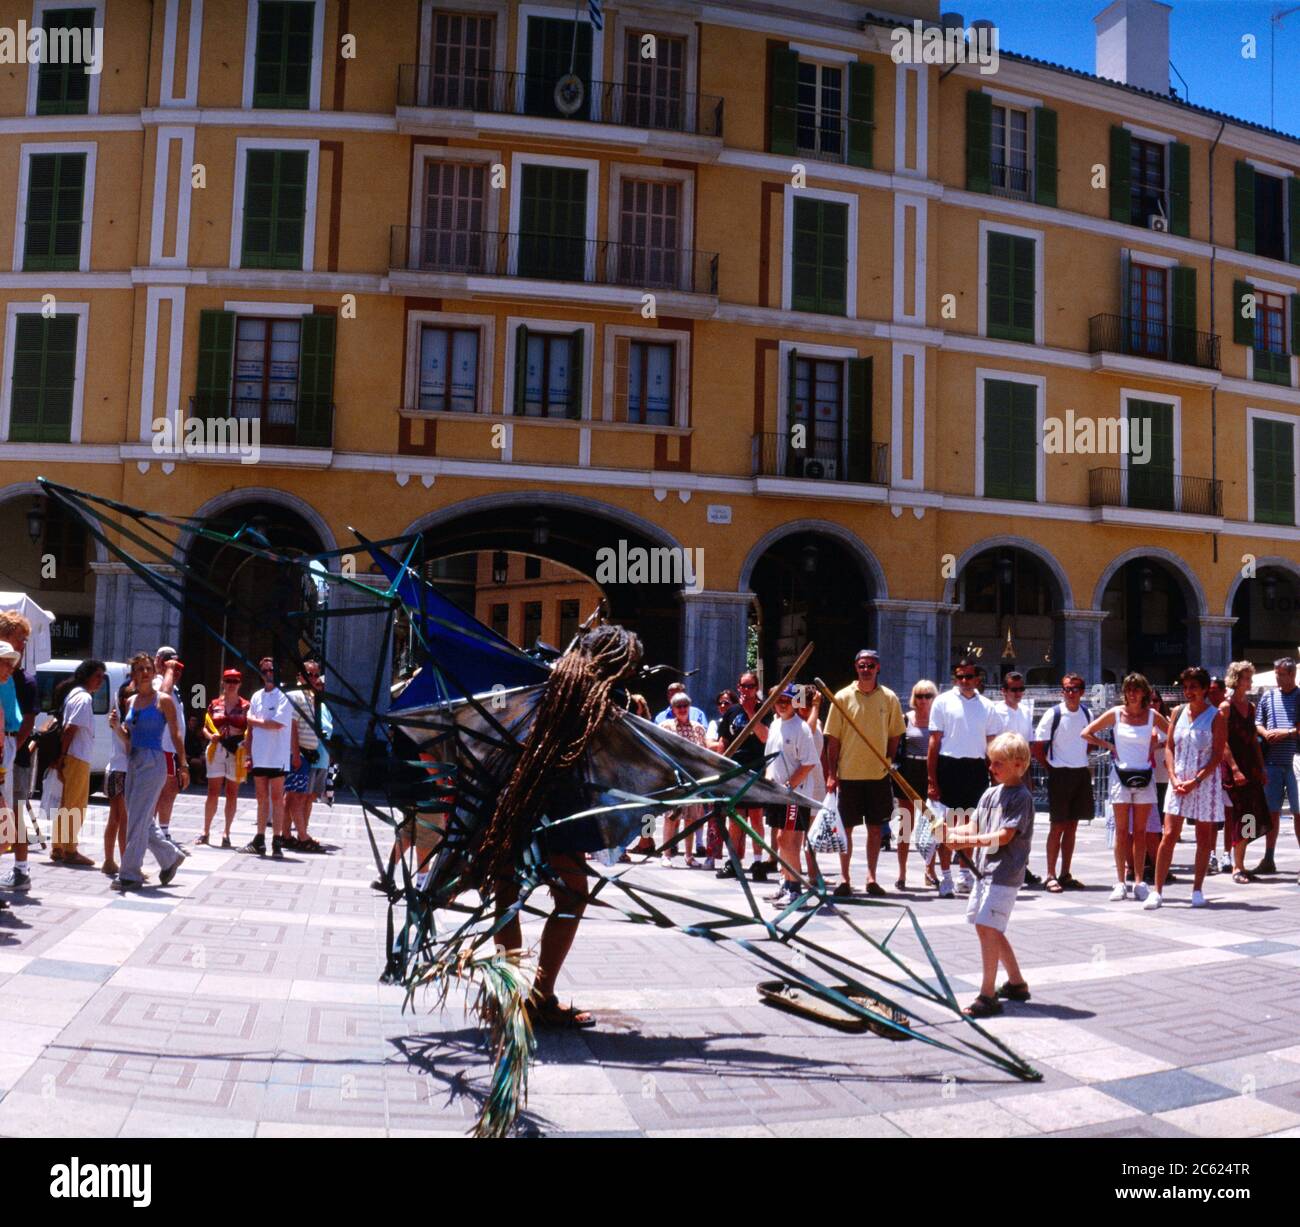 Palma Majorca Spain Placa Major Crowd Watching Street Entertainer Stock Photo